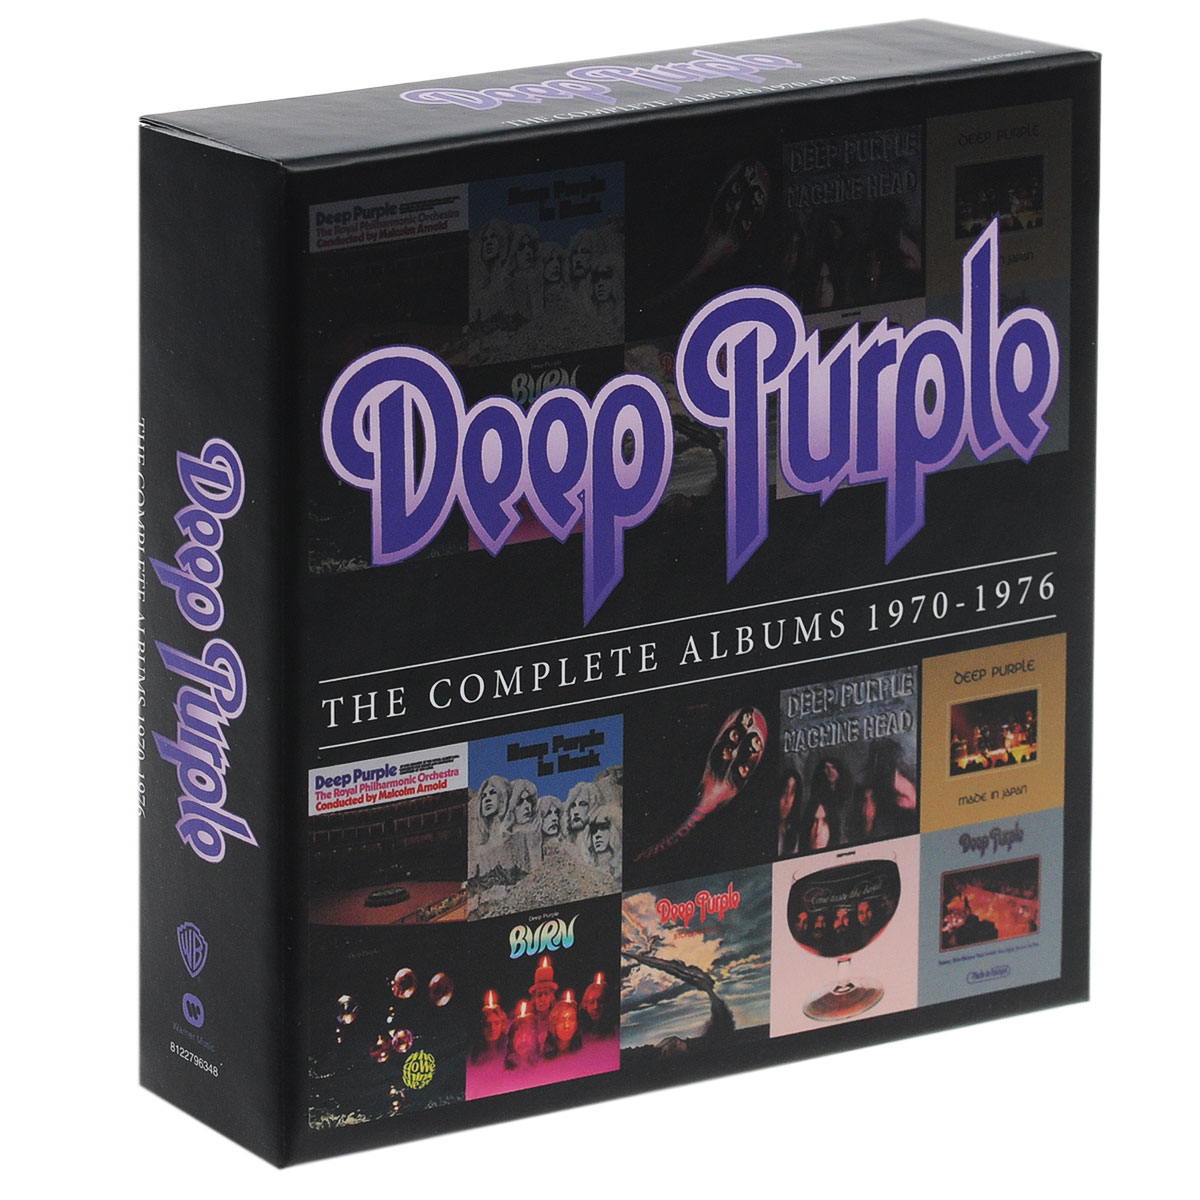 Дип перпл машин. Deep Purple Box Set LP. Deep Purple CD Box collection. Original album Classics Deep Purple. Deep Purple complete album 1970-1976.